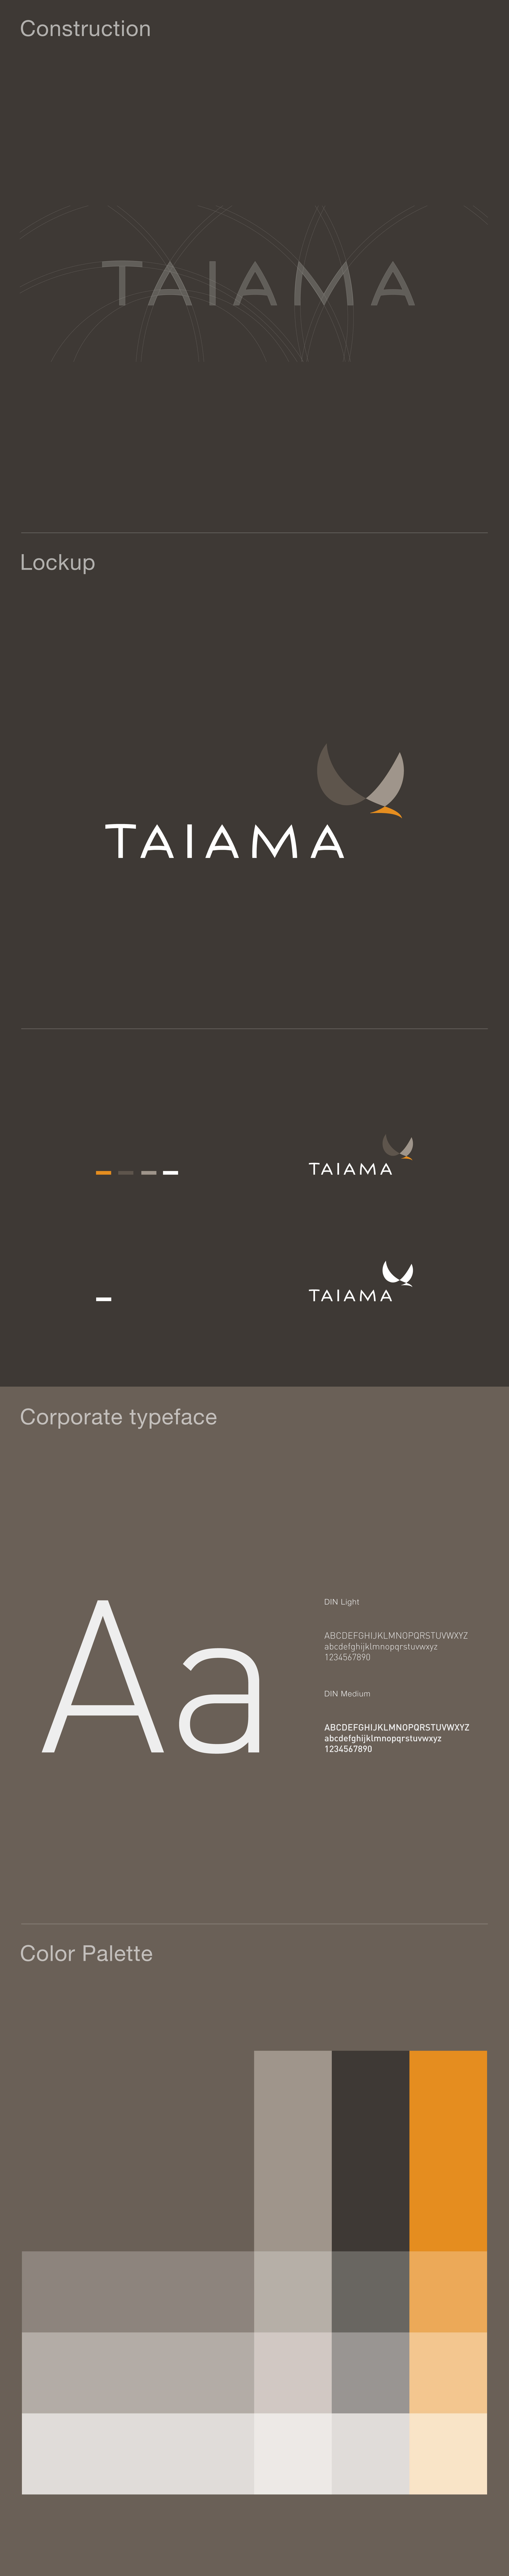 Taiama: Visual Identity